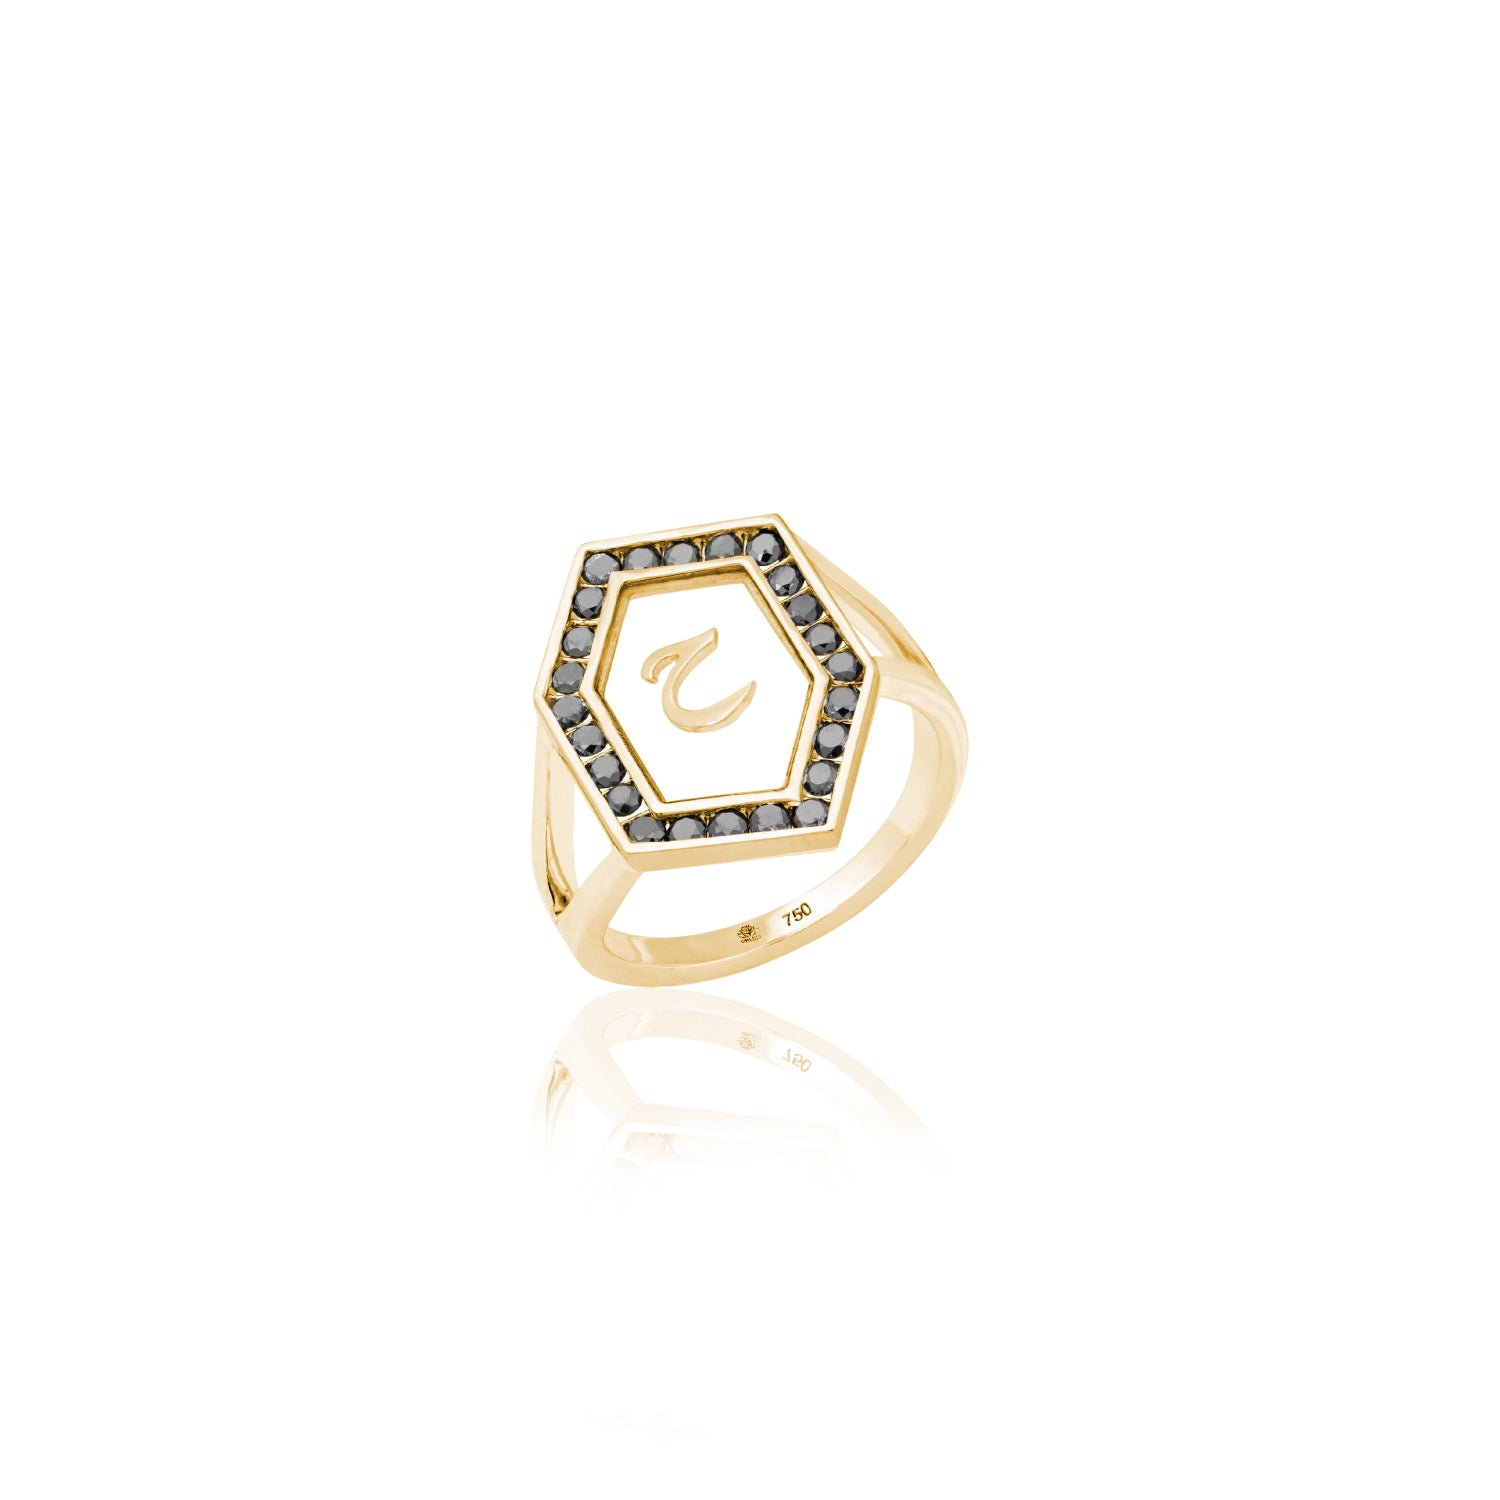 Qamoos 1.0 Letter ح Black Diamond Ring in Yellow Gold